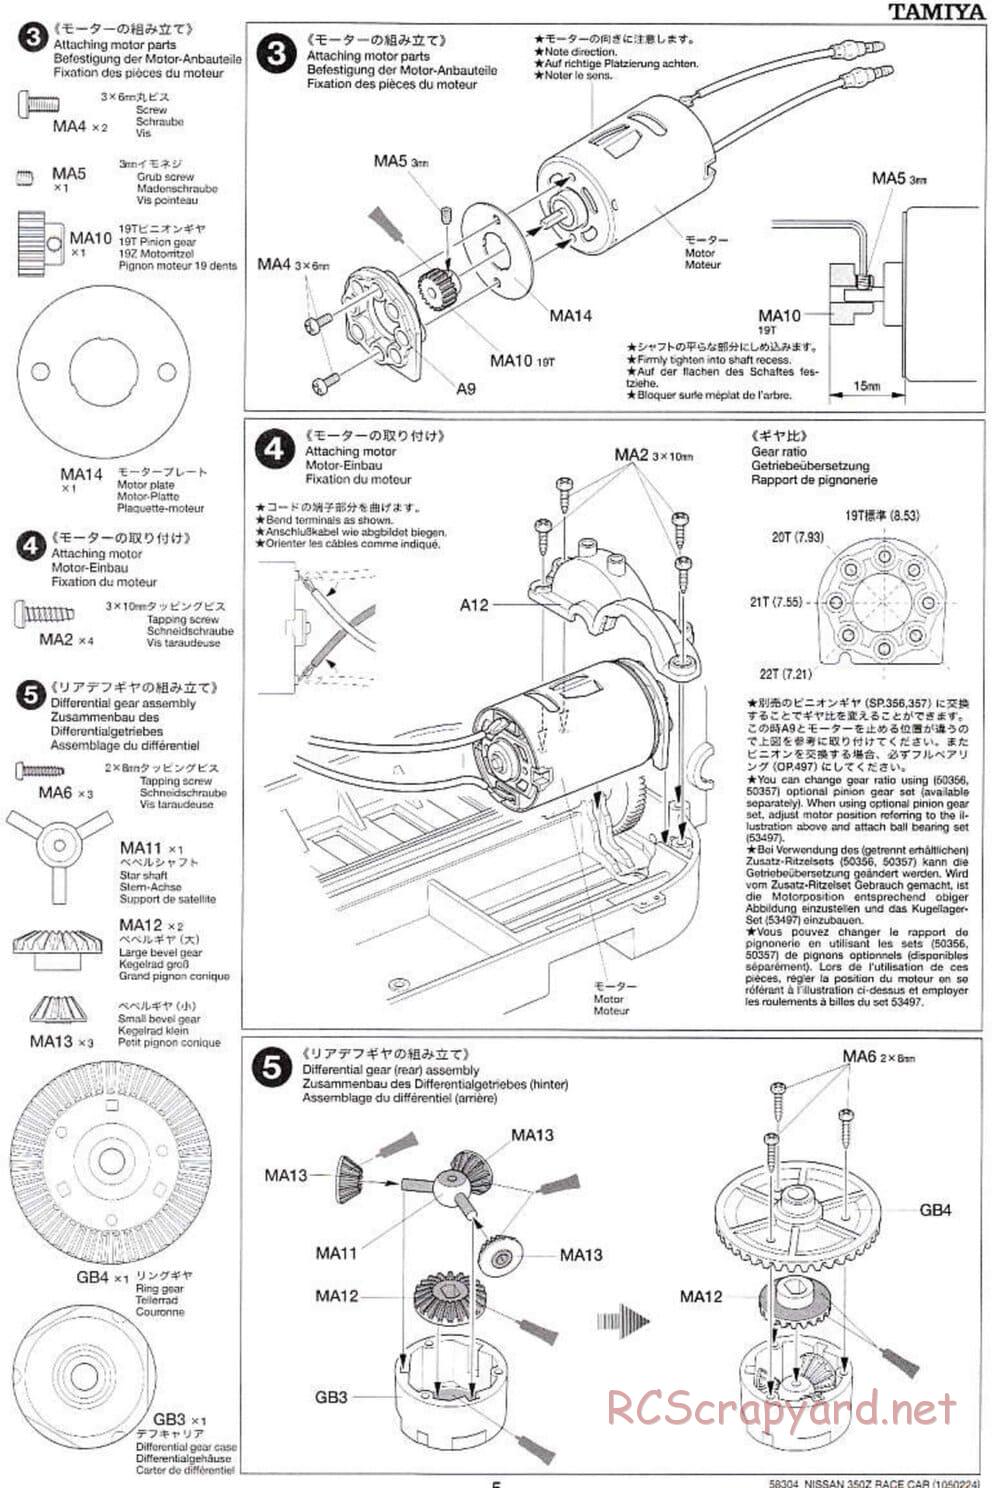 Tamiya - Nissan 350Z Race-Car - TT-01 Chassis - Manual - Page 5